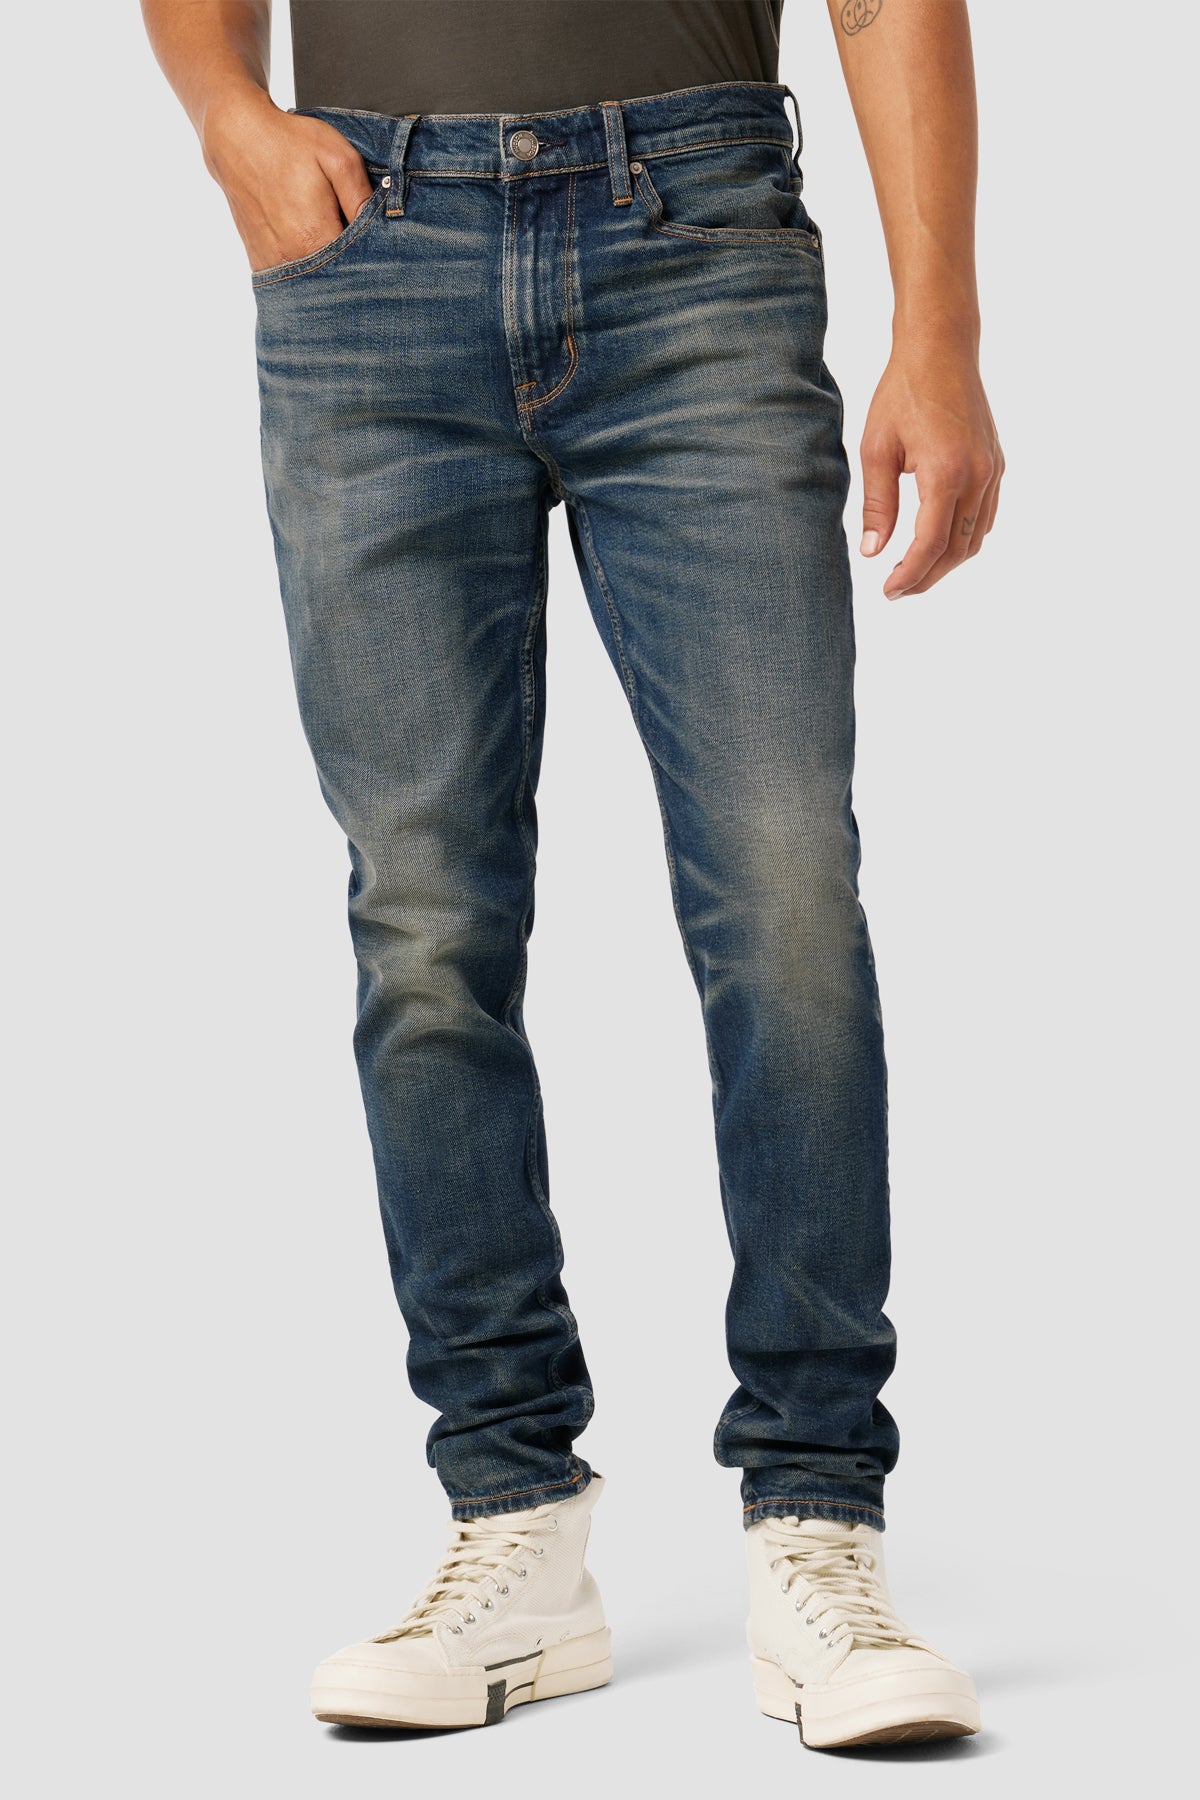 ZACK SKINNY | Premium Italian Fabric | Hudson Jeans